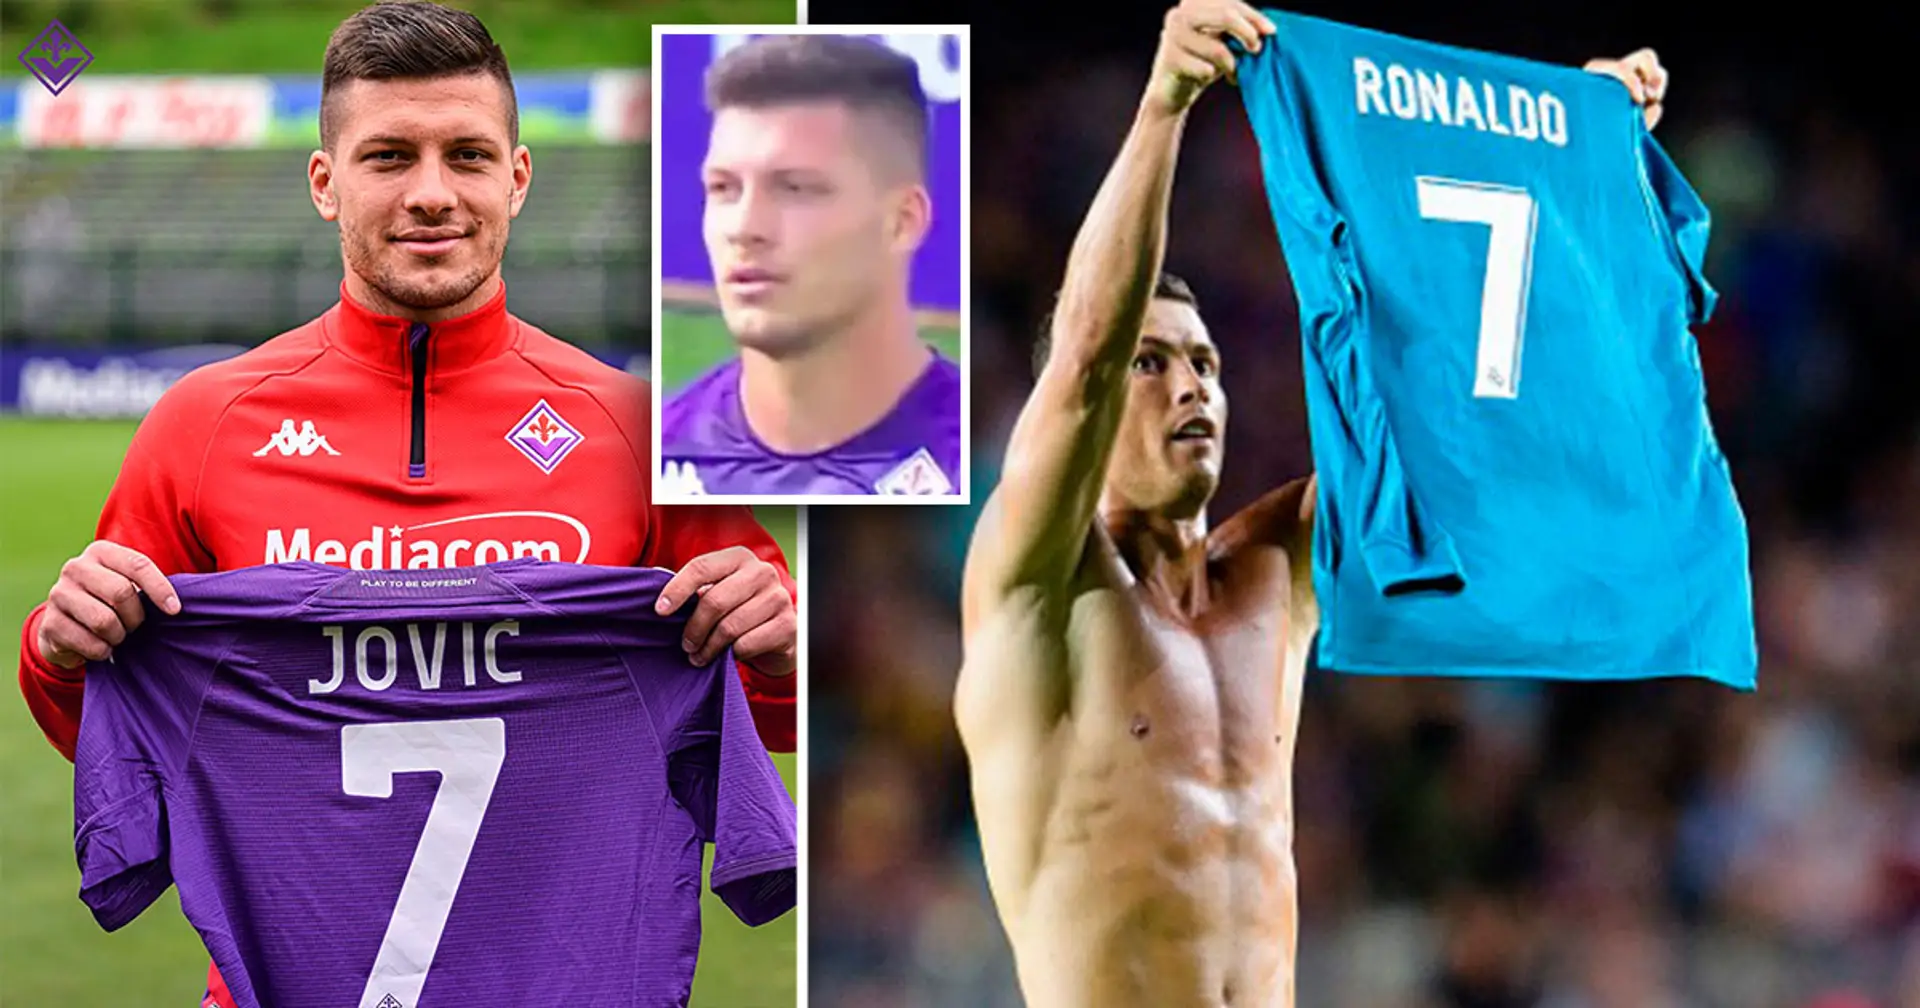 Jovic: 'Elegí el dorsal 7 en la Fiorentina gracias a Cristiano, el mejor jugador de la historia'